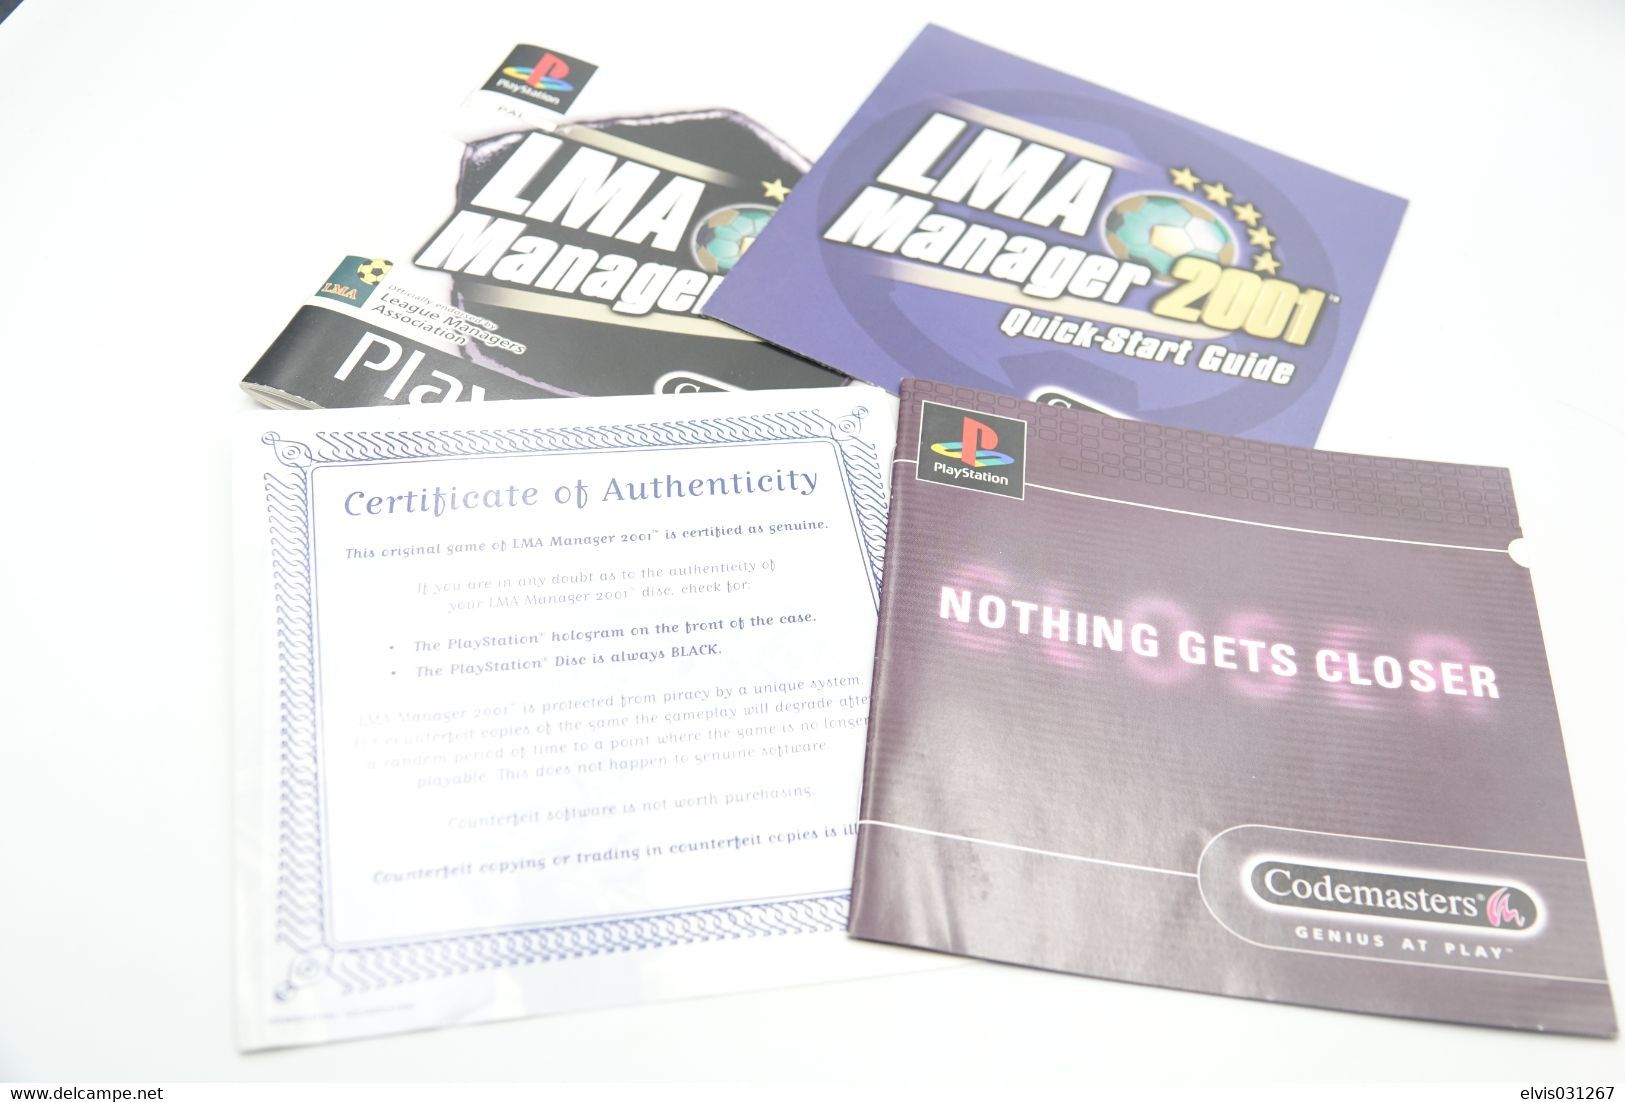 SONY PLAYSTATION ONE PS1 : LMA MANAGER 2001 FOODBALL SOCCER - CODEMASTERS - Playstation